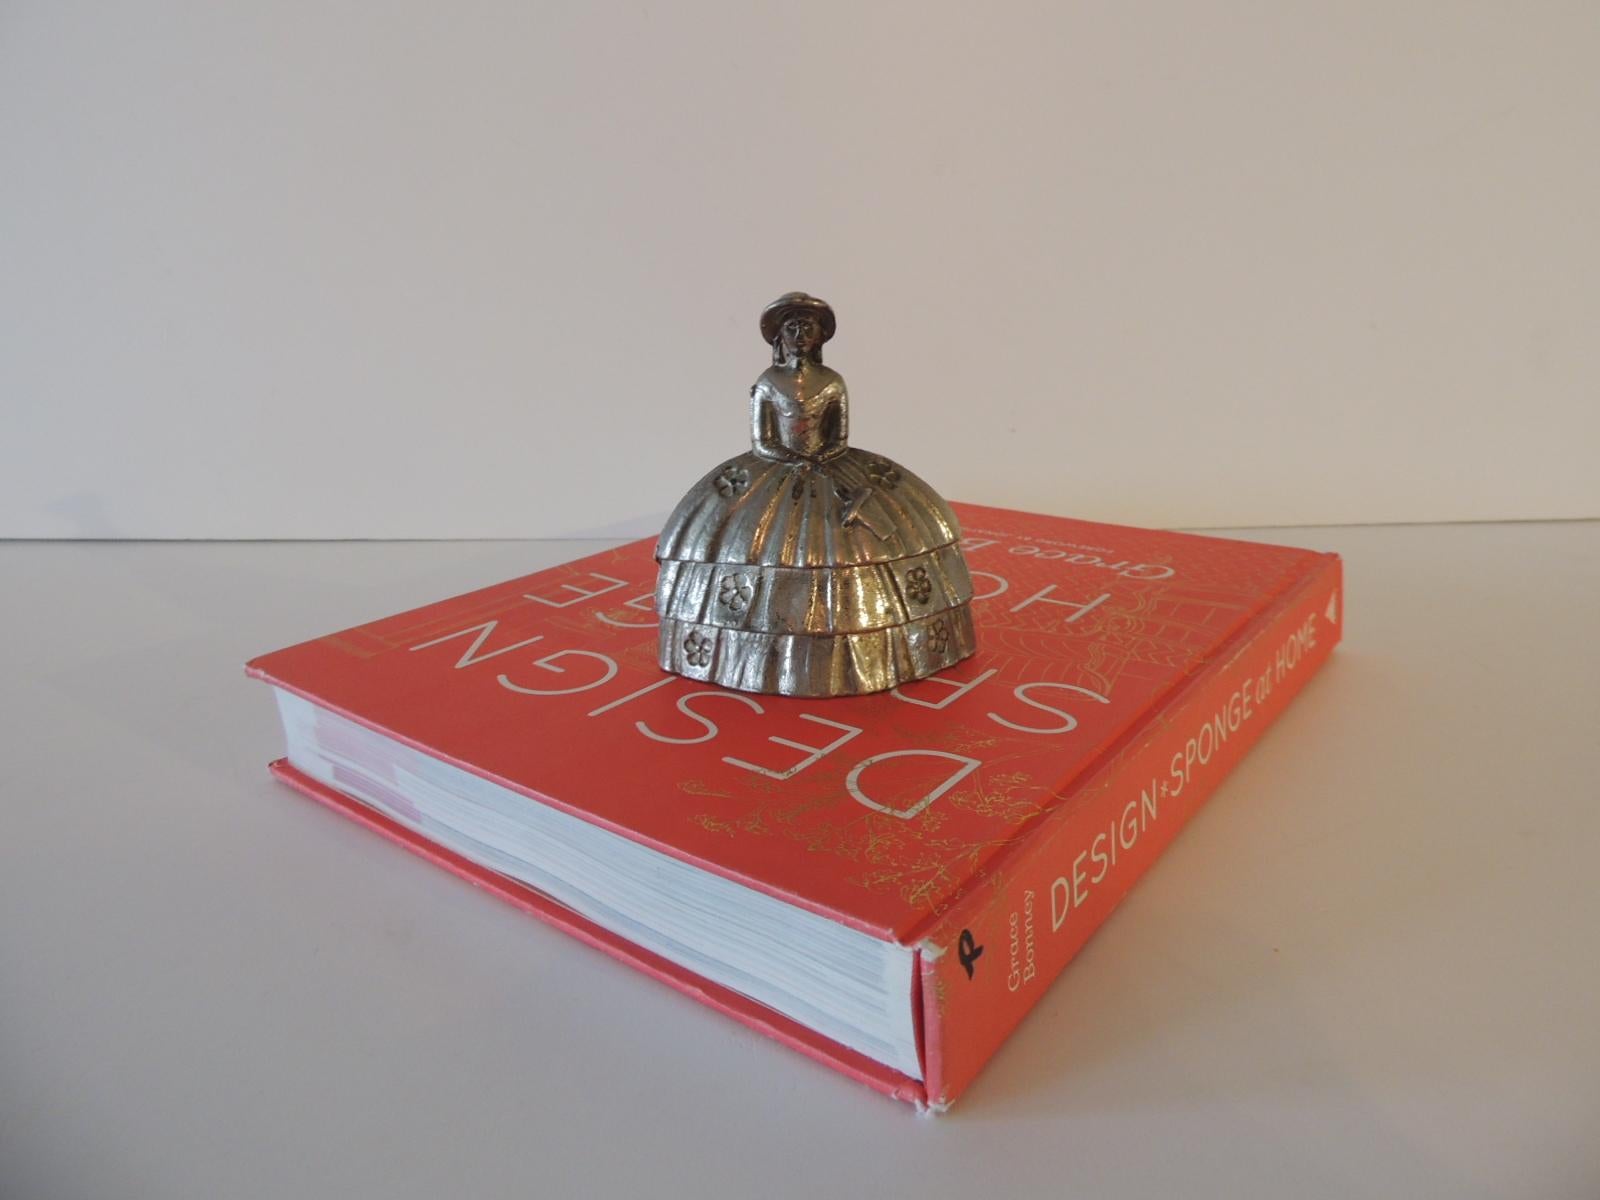 Pewter table bell of Infanta Margarita Teresa Juan Bautista Martine Del Mazo.
Size: 3.5